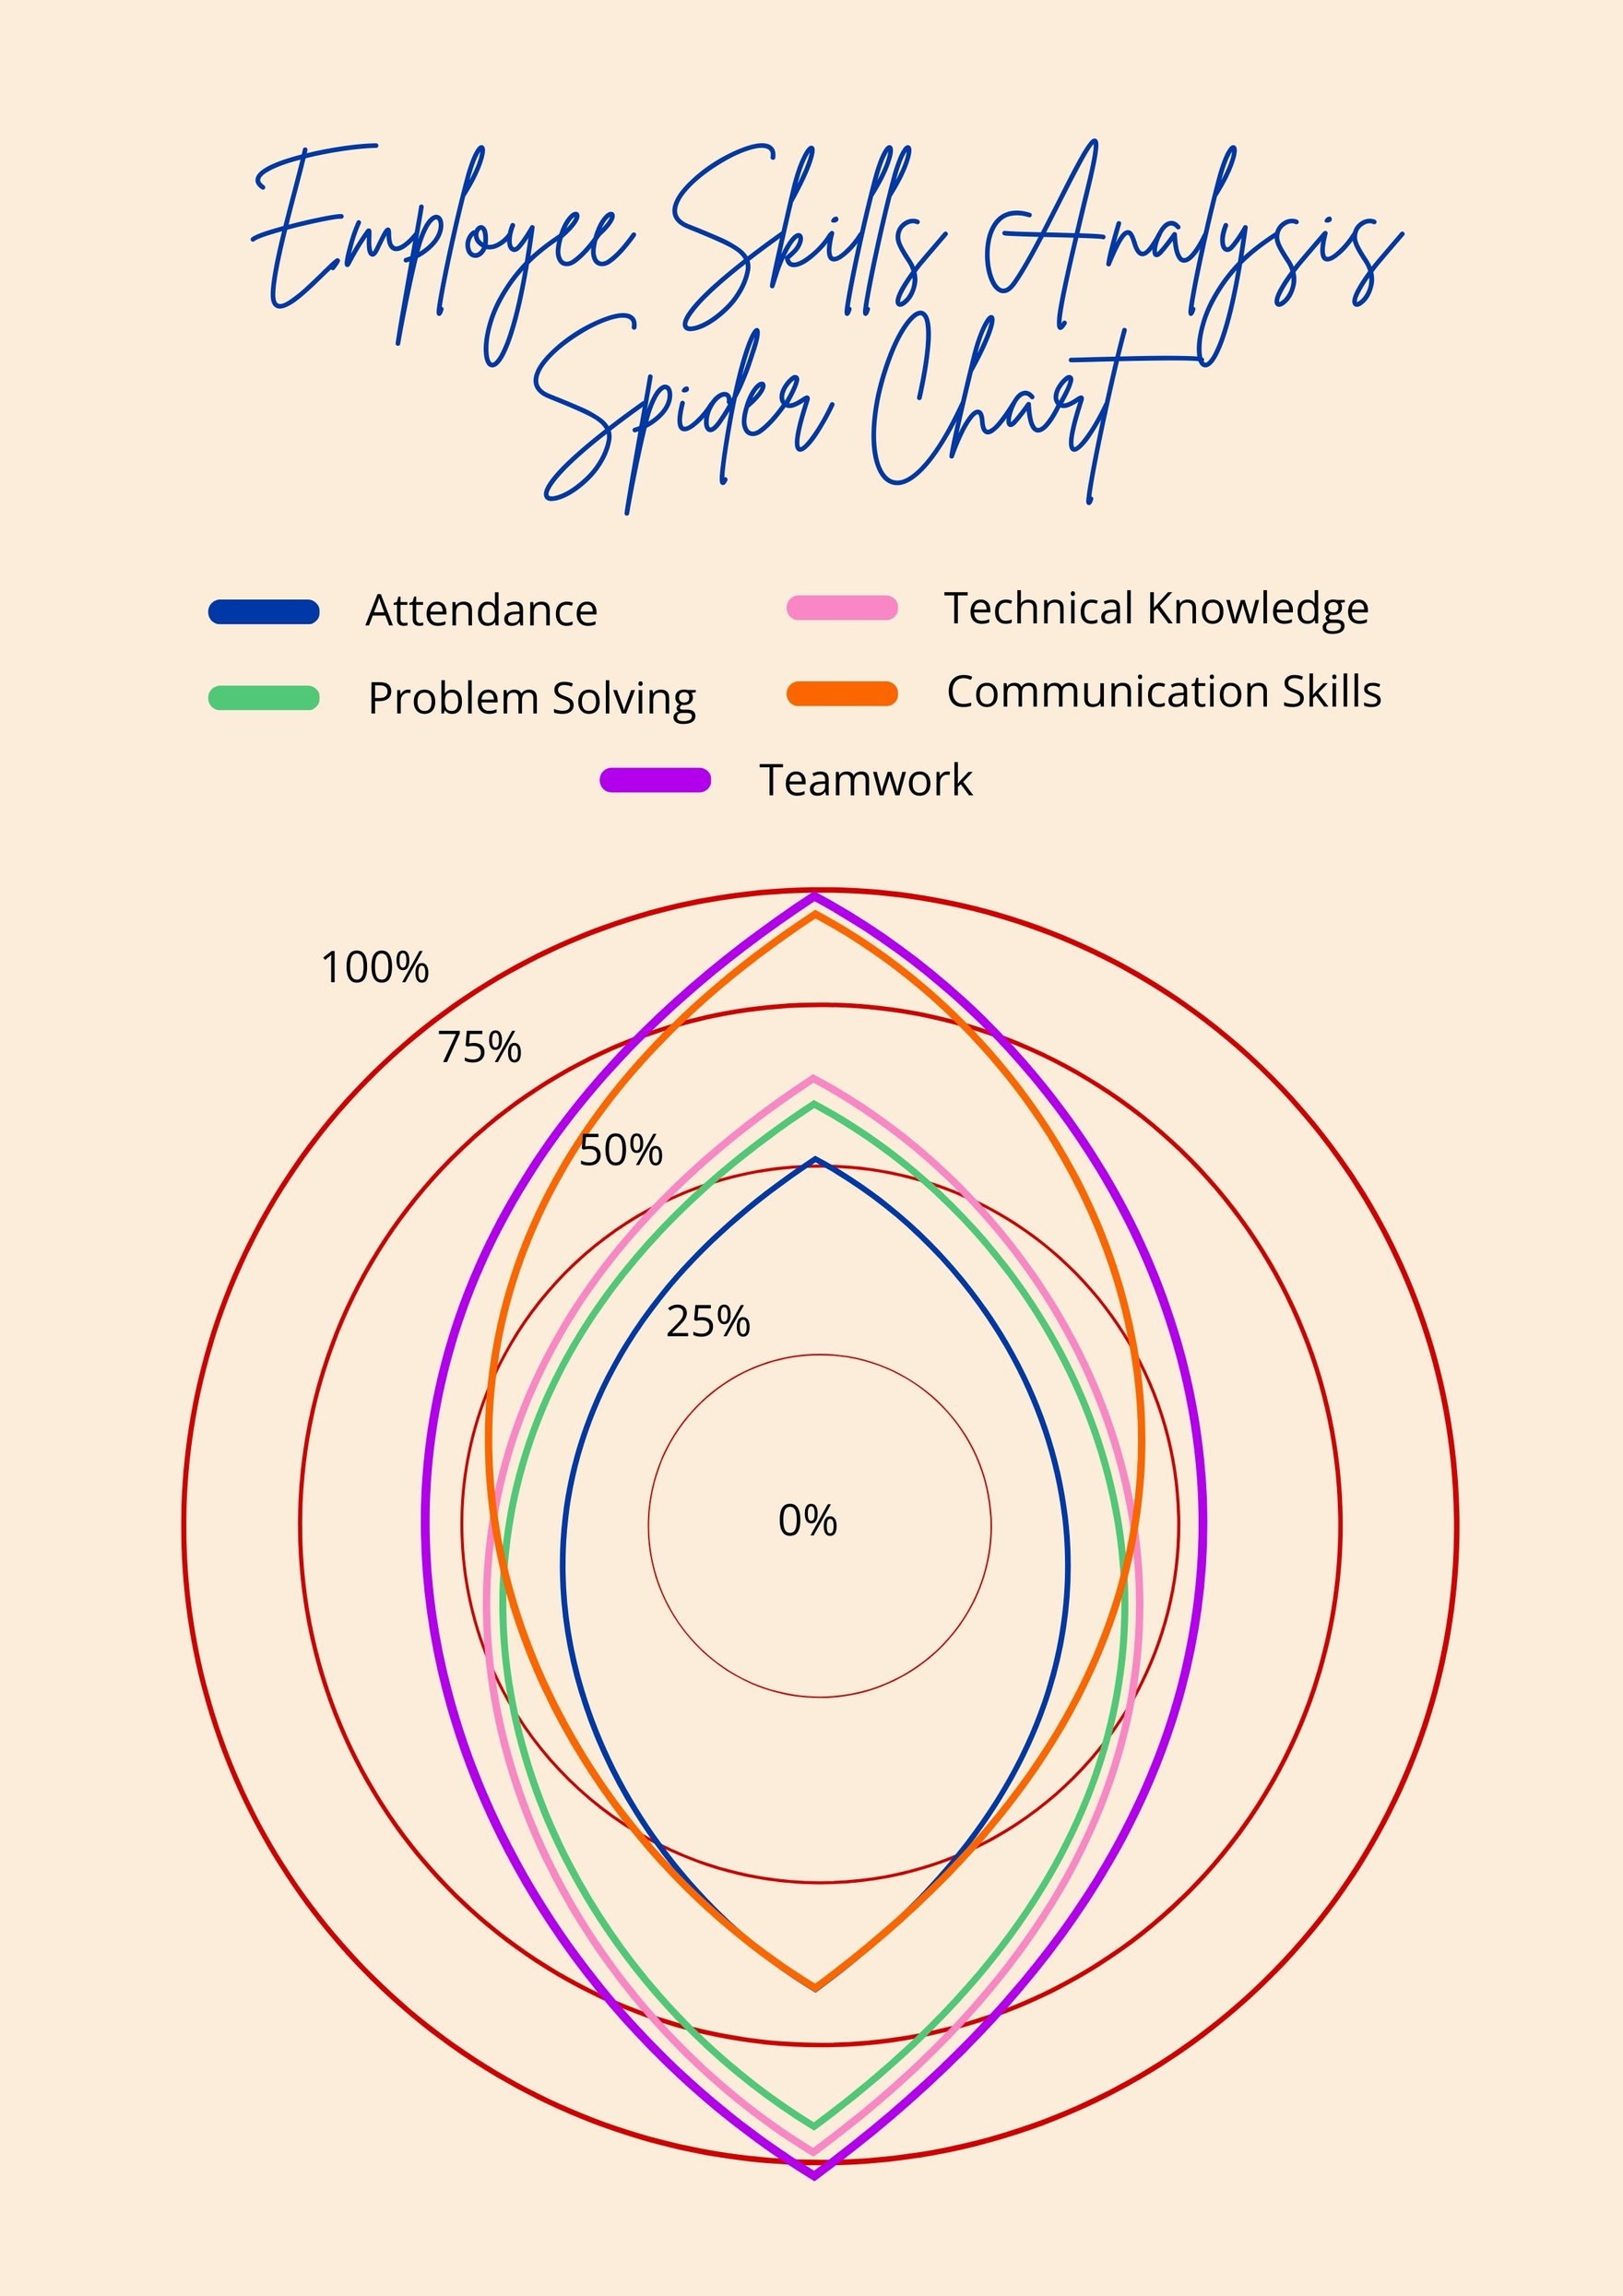 Employee Skills Analysis Spider Chart in PDF, Illustrator